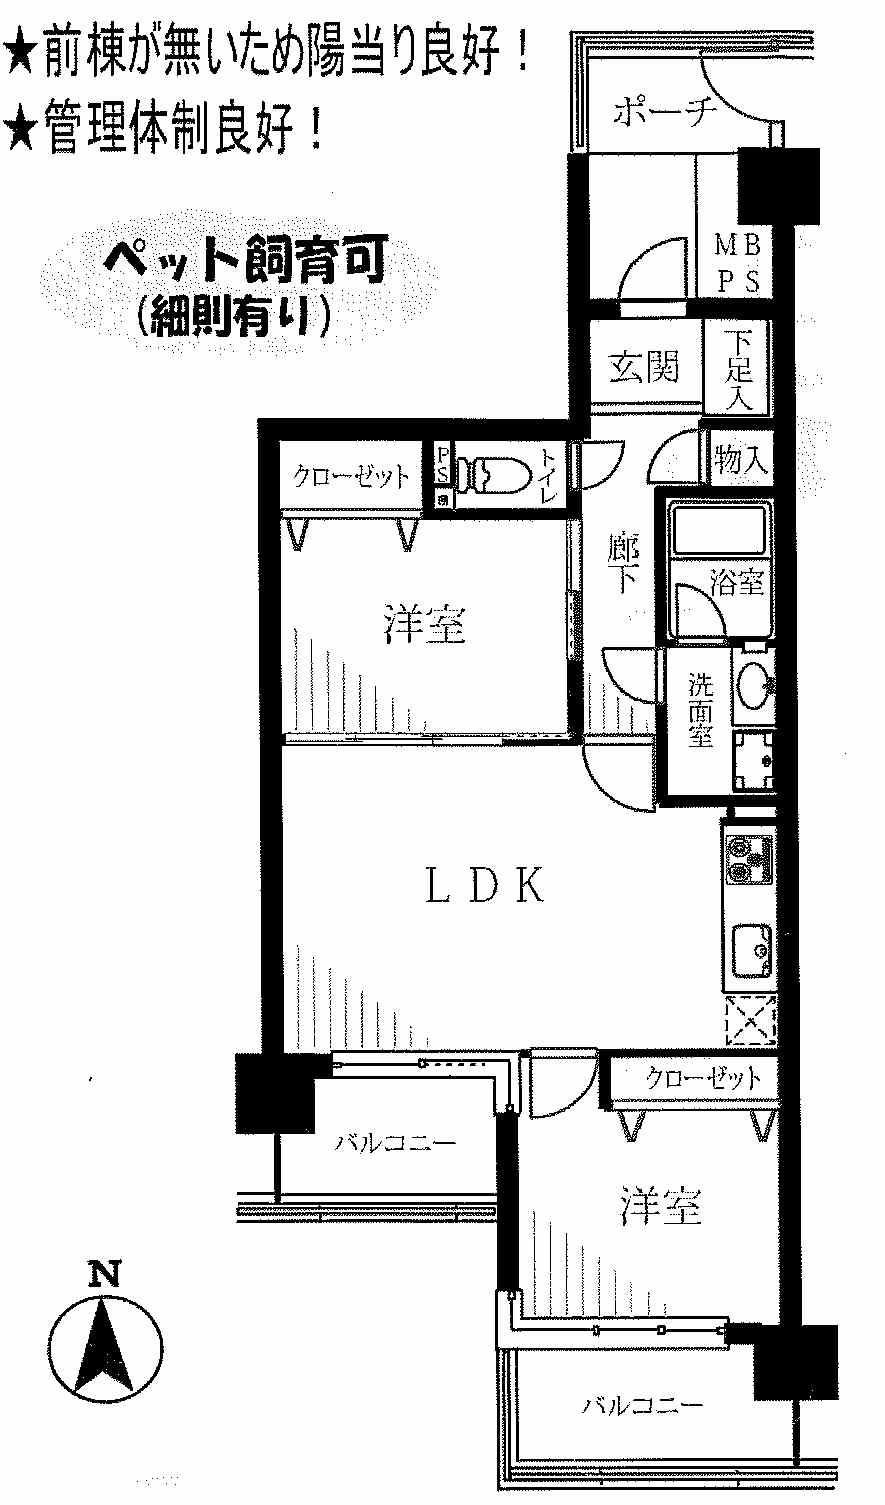 Floor plan. 2LDK, Price 17.8 million yen, Footprint 58.8 sq m , Balcony area 10.2 sq m 2LDK facing south.